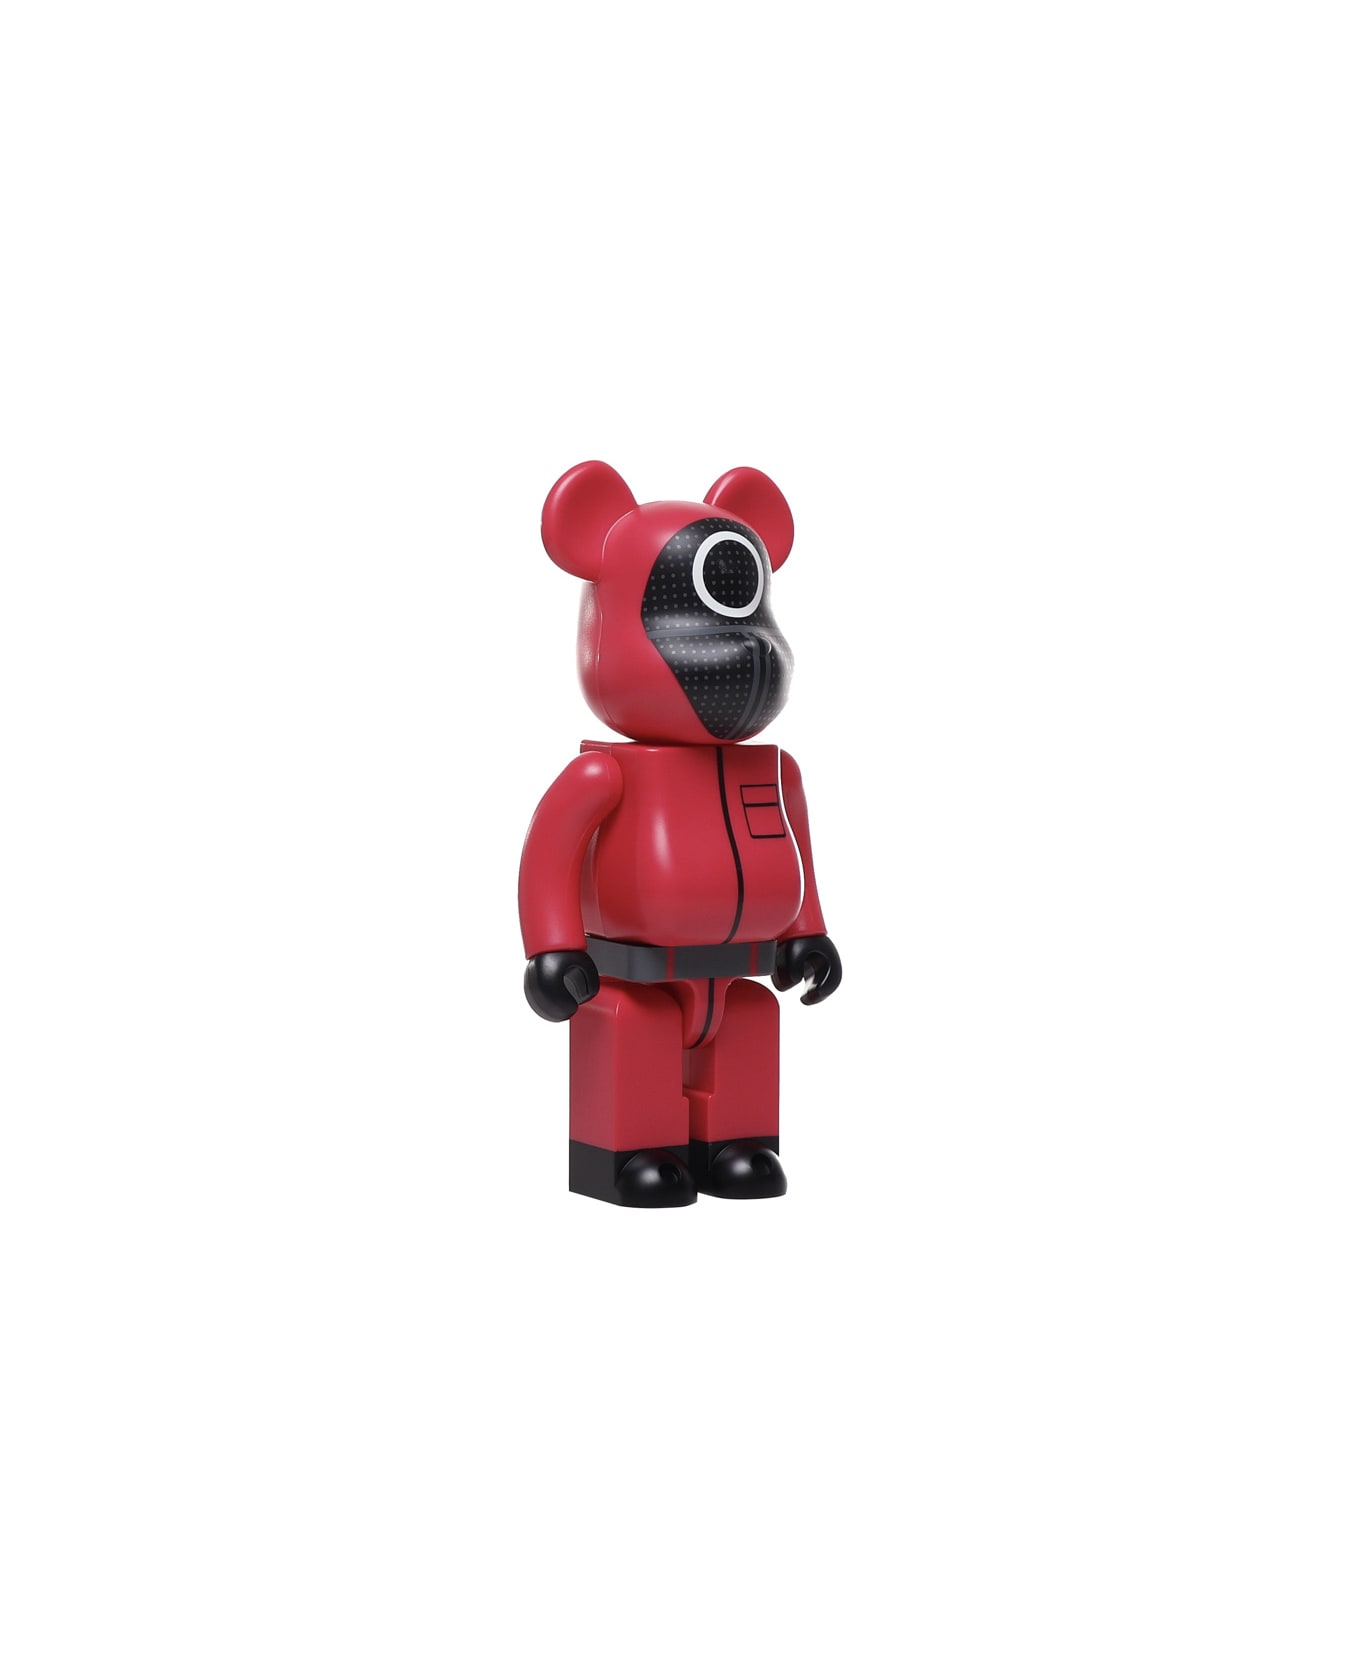 Medicom Toy Squid Game Guard Square - Red, black